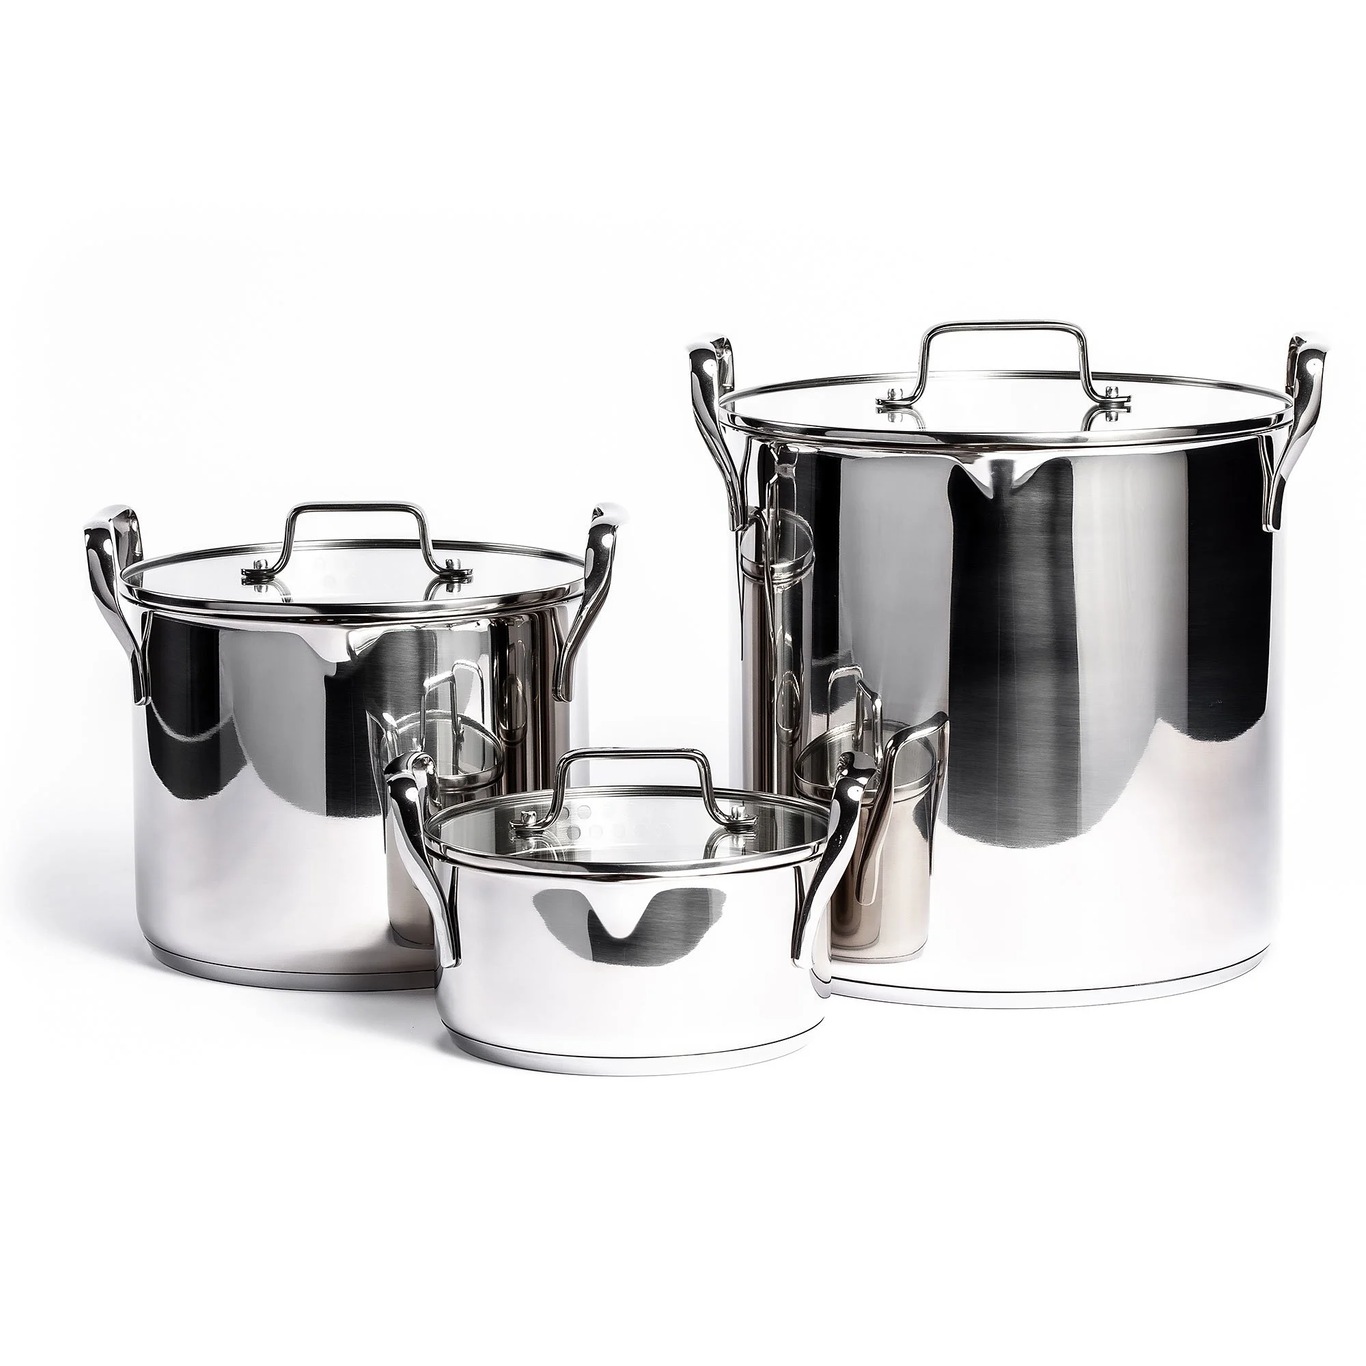 https://royaldesign.com/image/2/mareld-mareld-stackable-pot-set-stainless-steel-1-45-10l-0?w=800&quality=80